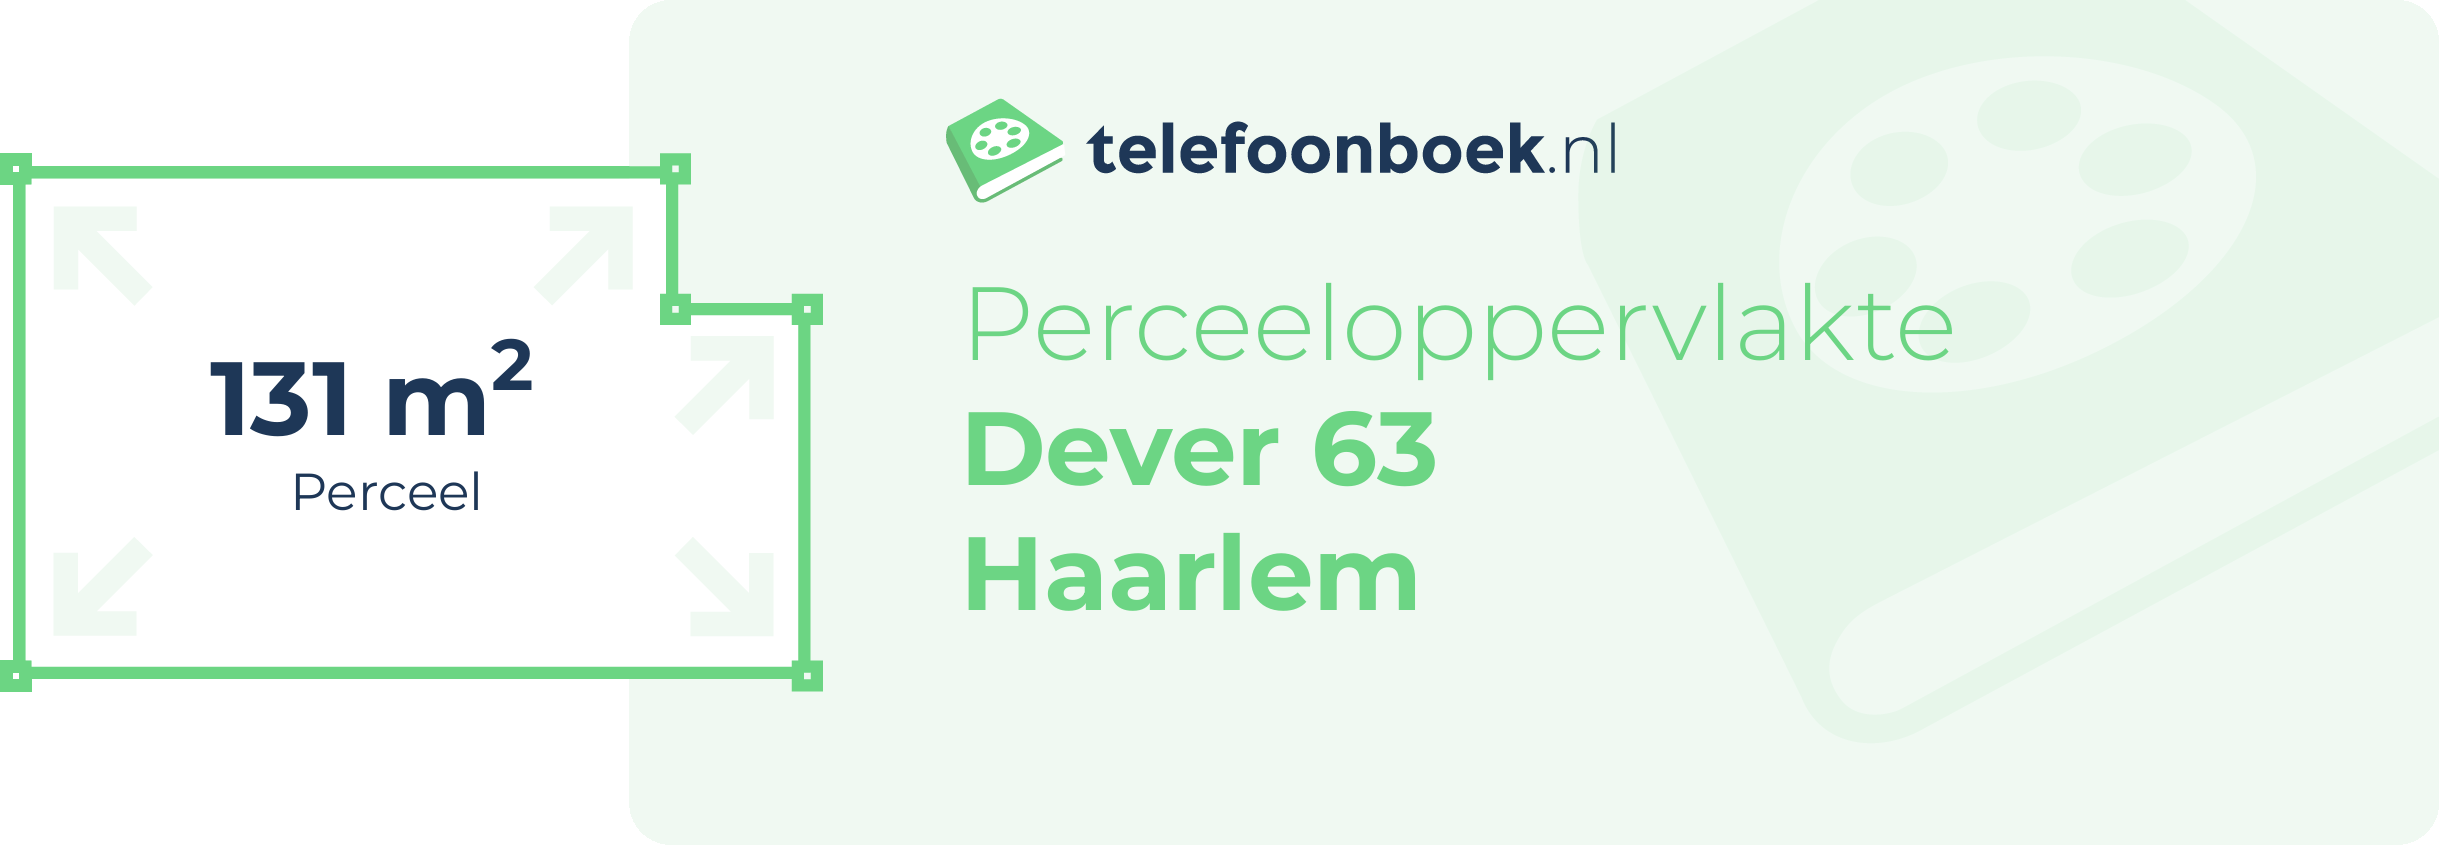 Perceeloppervlakte Dever 63 Haarlem